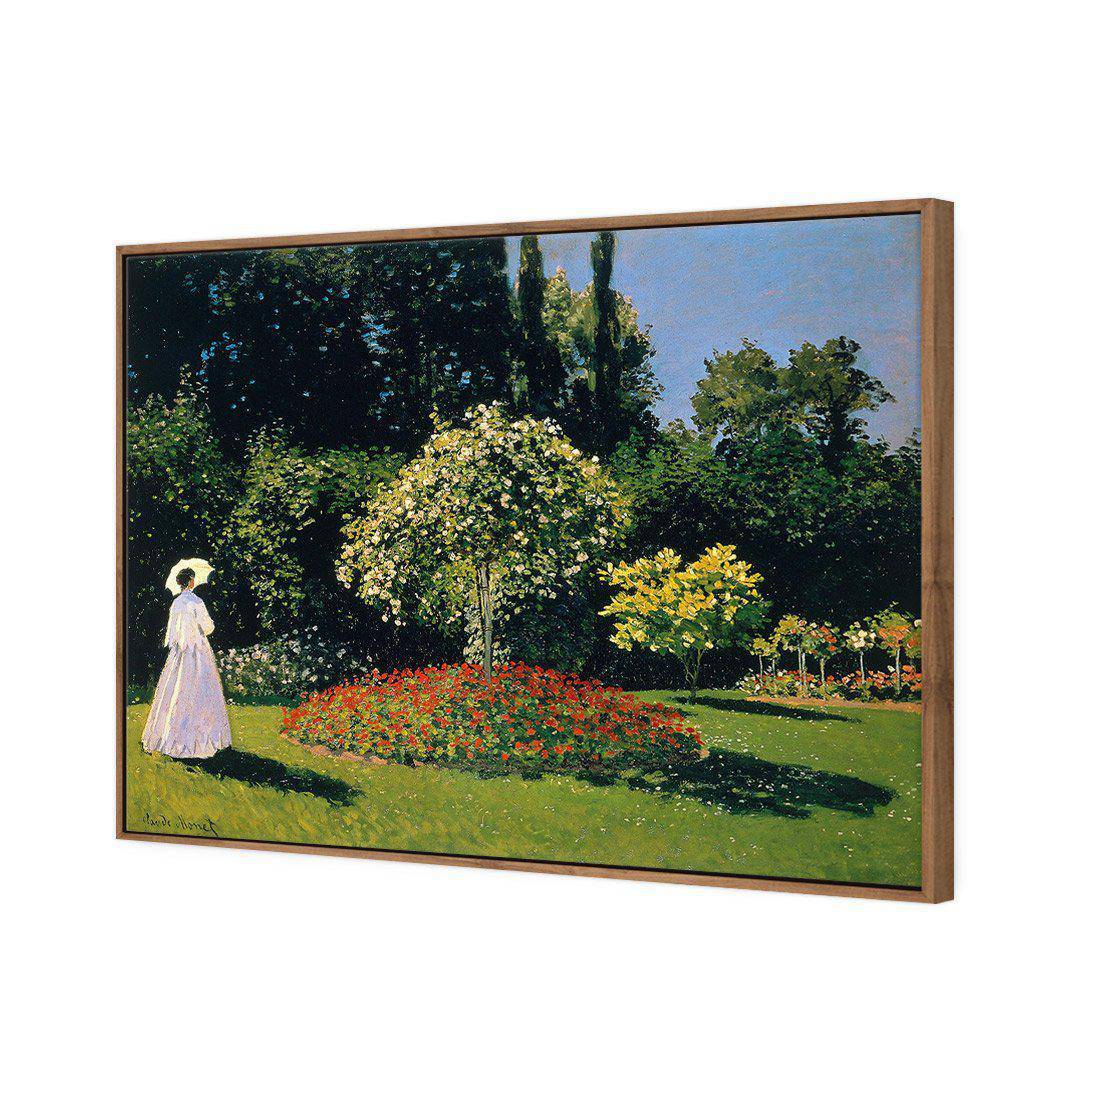 Woman In A Garden - Monet Canvas Art-Canvas-Wall Art Designs-45x30cm-Canvas - Natural Frame-Wall Art Designs